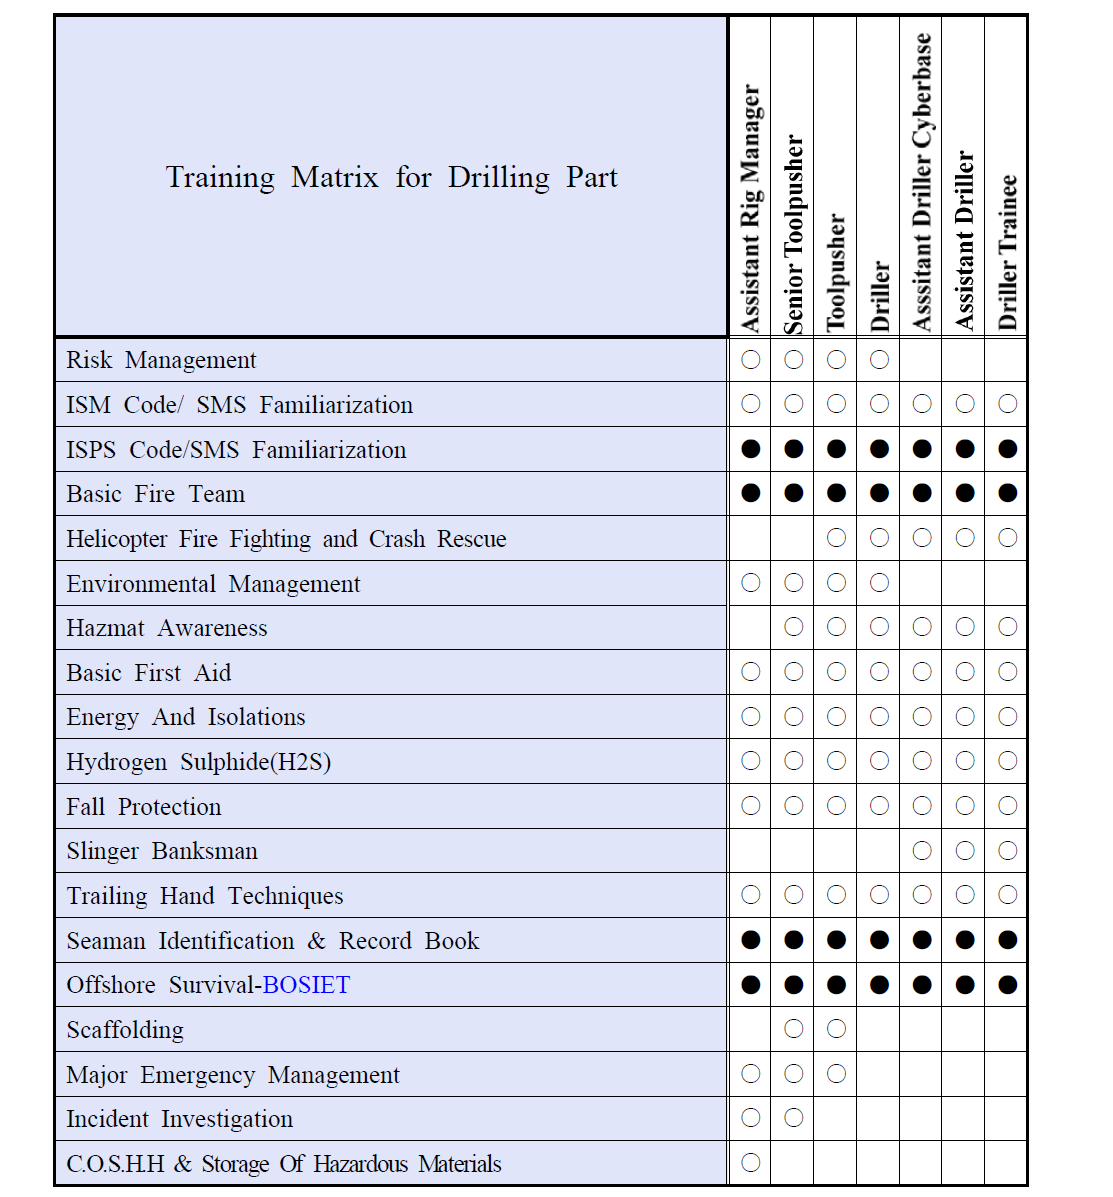 Drillship/Drill Rig의 드릴 분야의 교육․훈련 Matrix